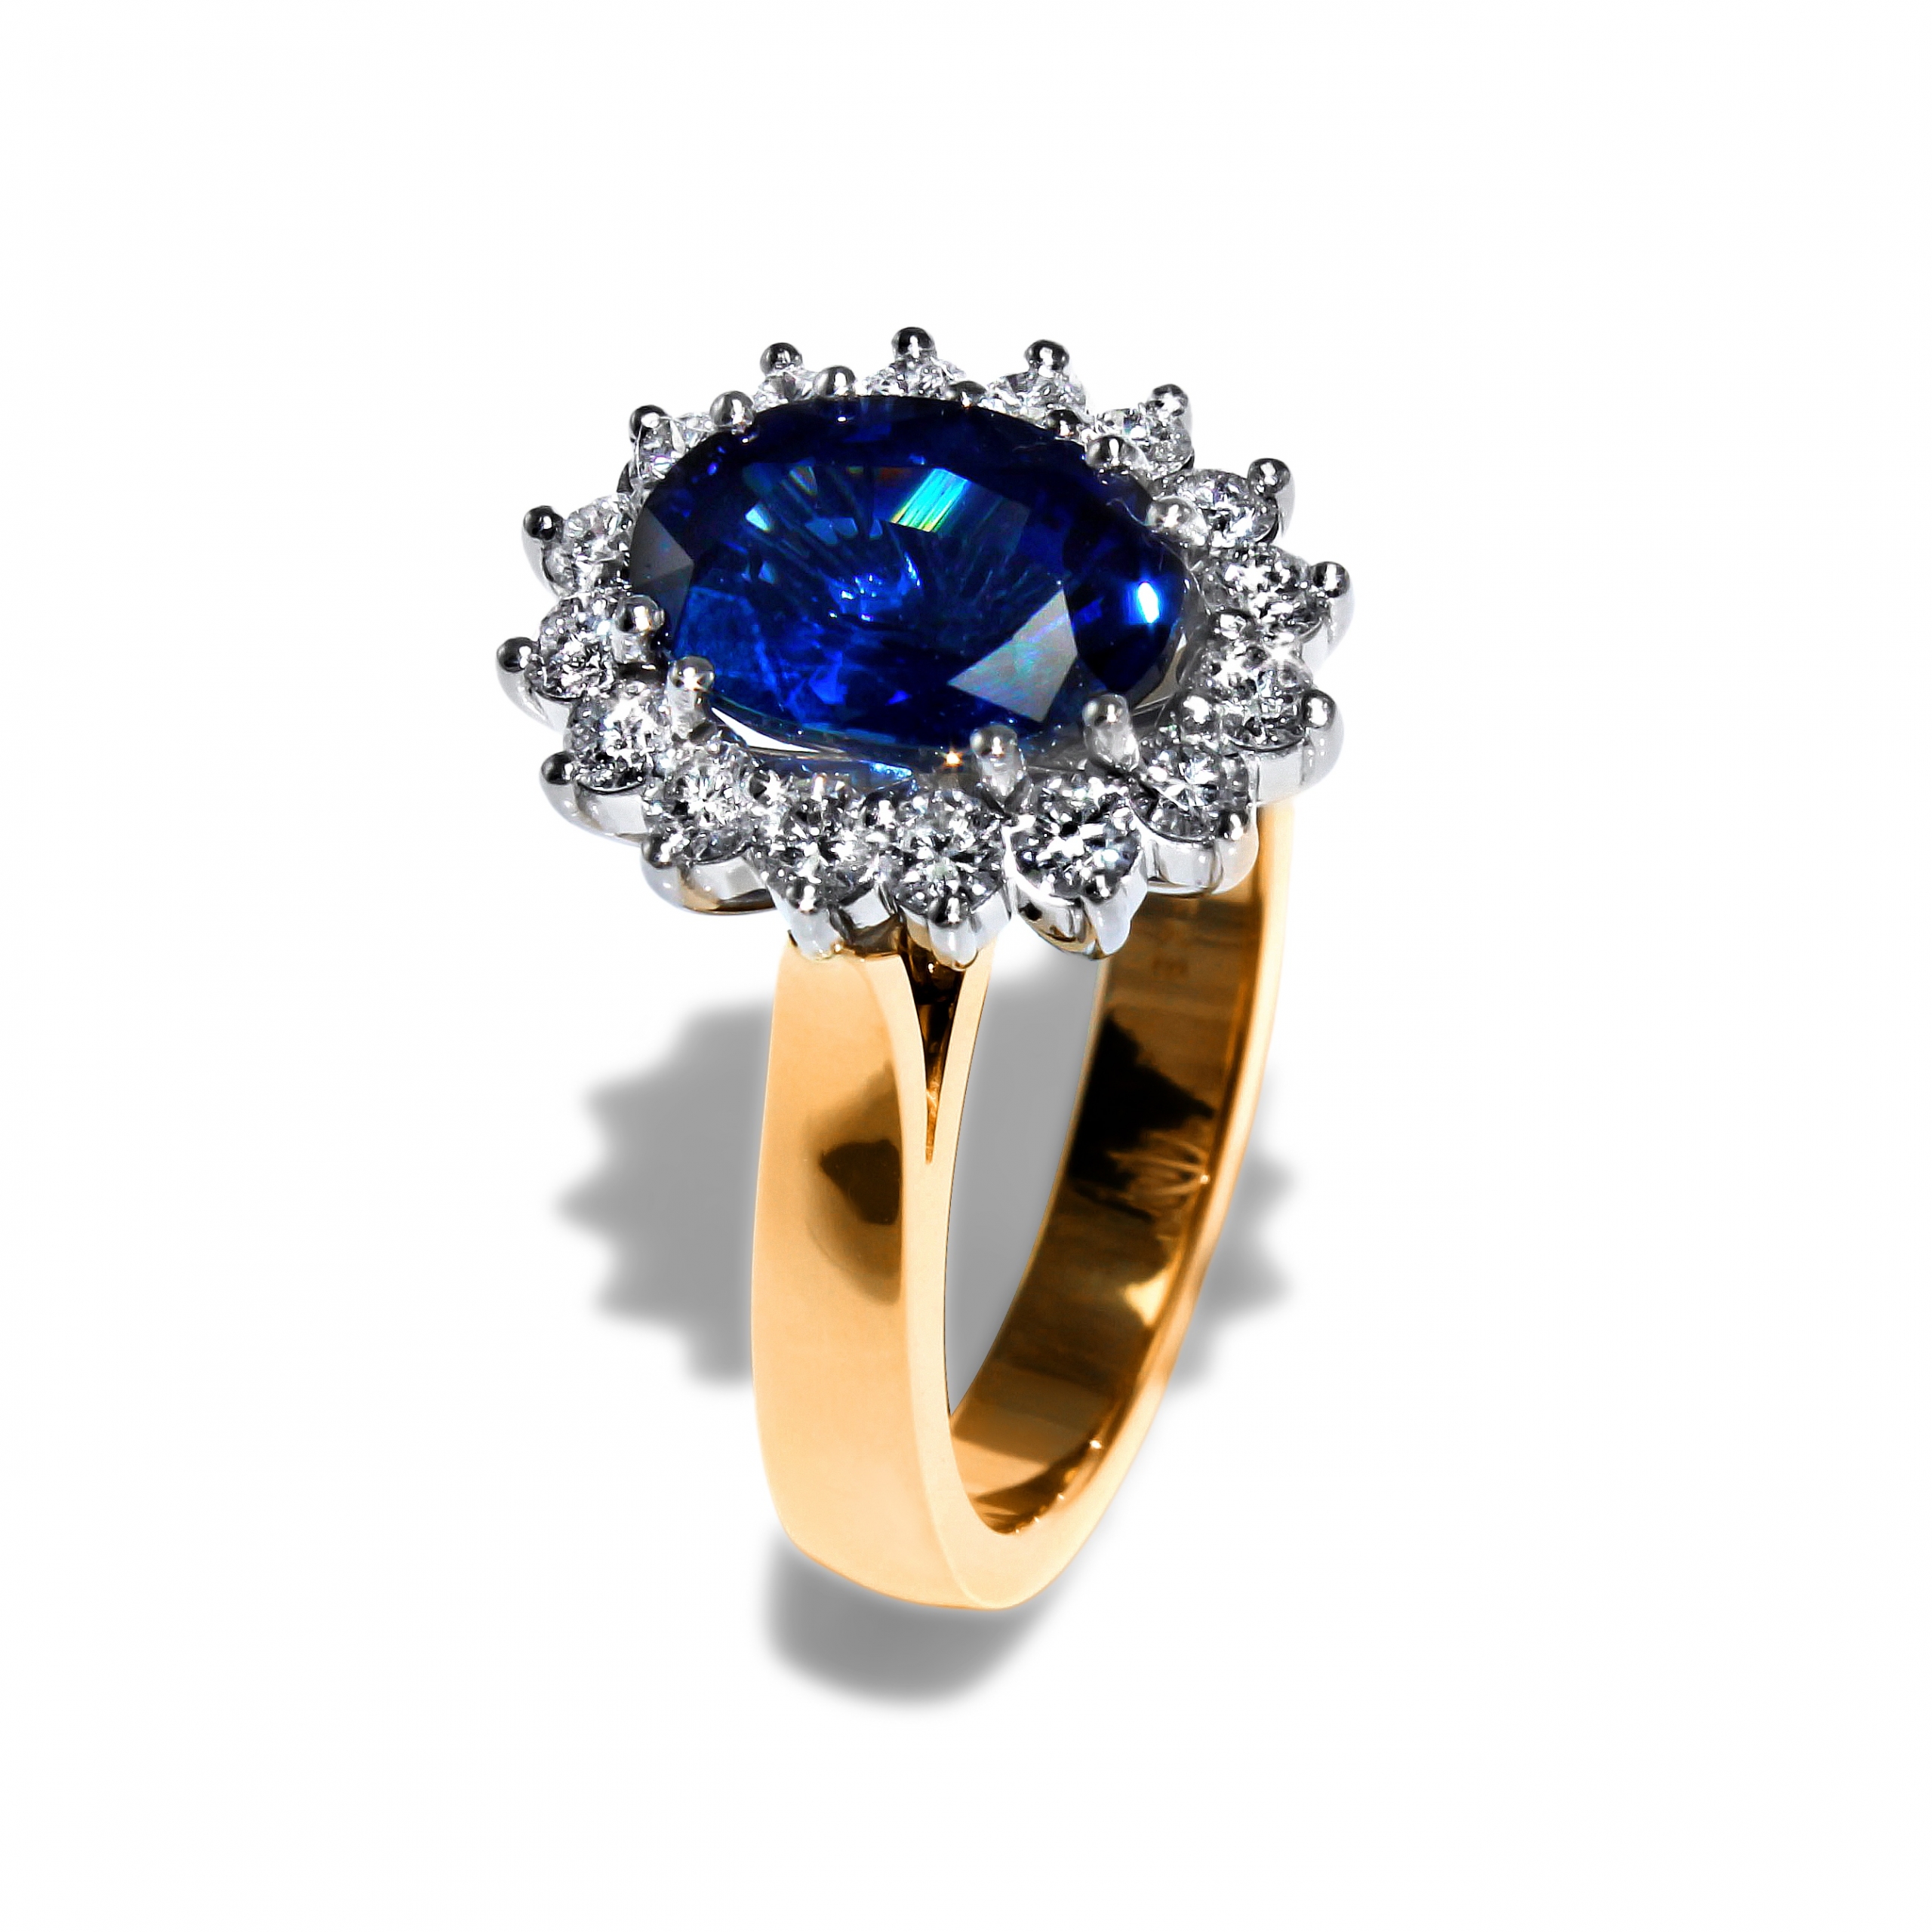 Princess Diana's Engagement Ring Has a Fascinating History